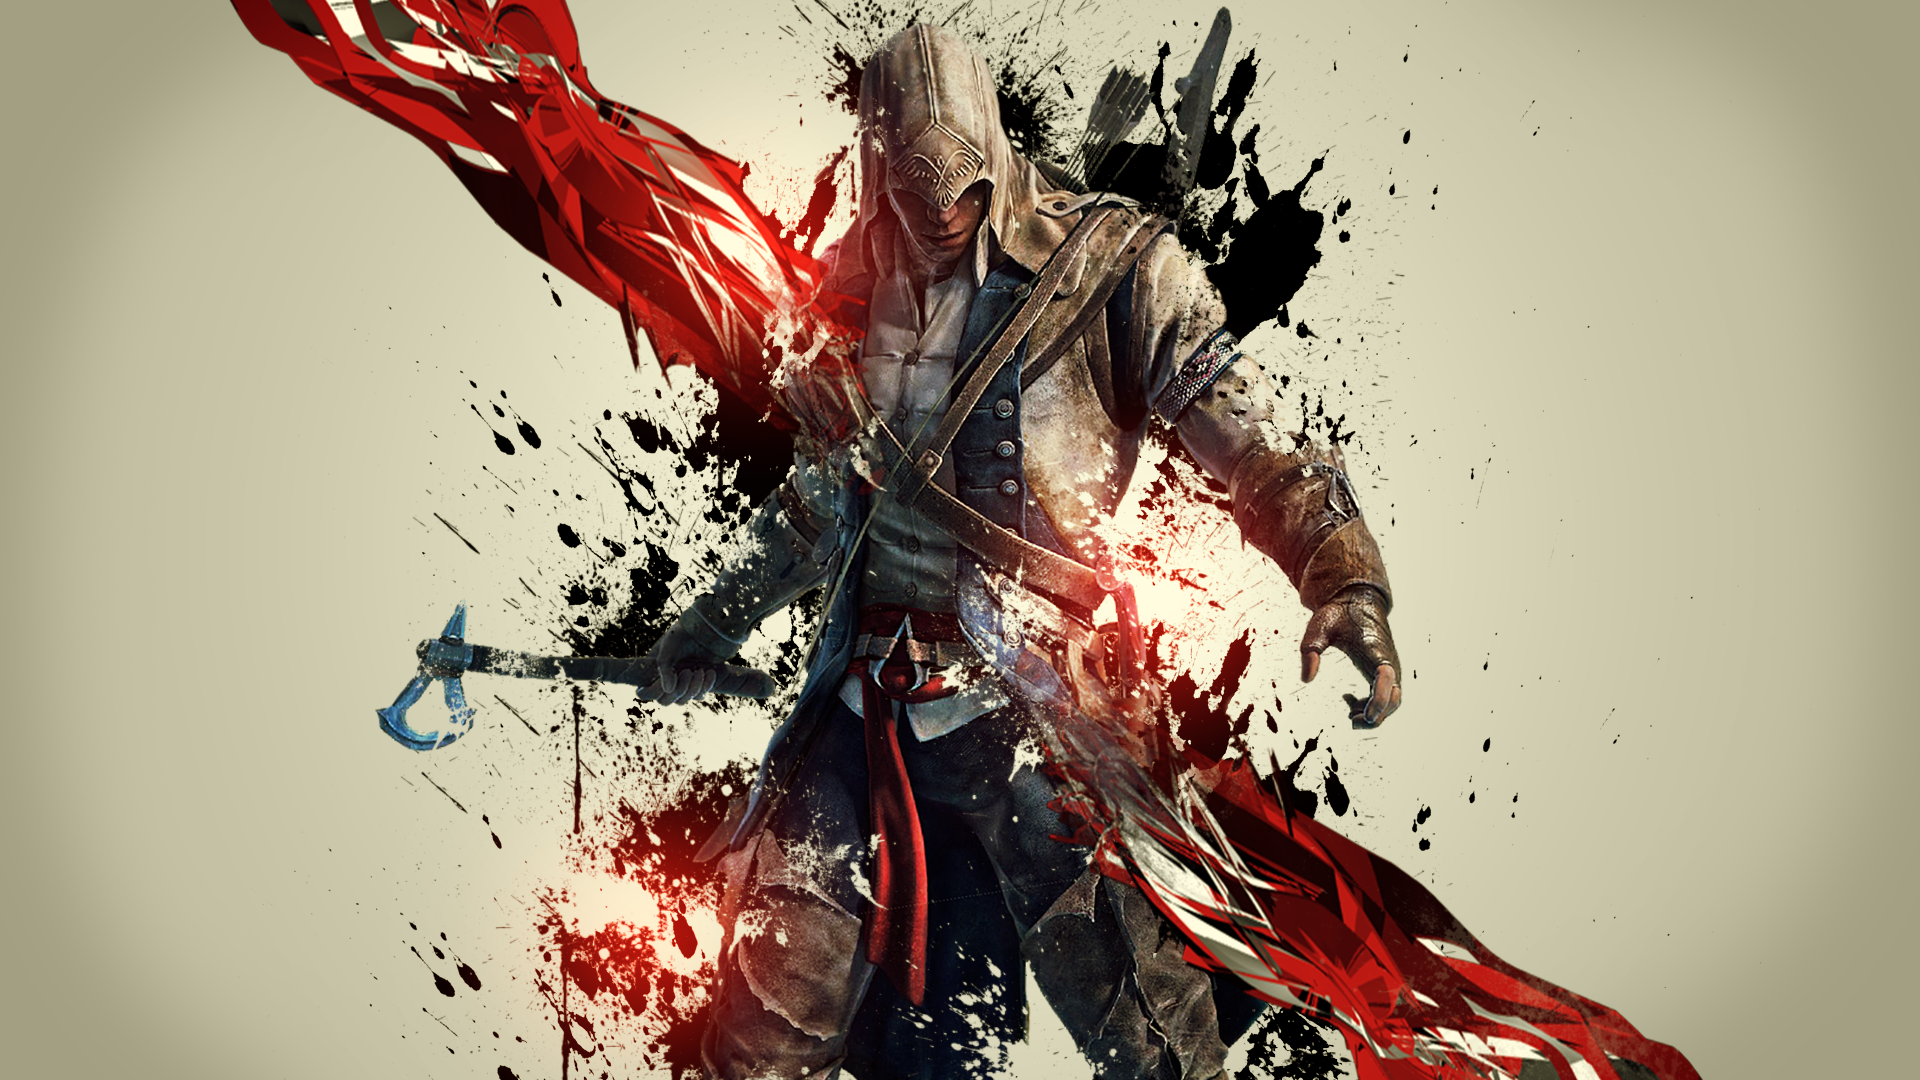 Ultra Viciados Assassin S Creed Wallpaper High Definition